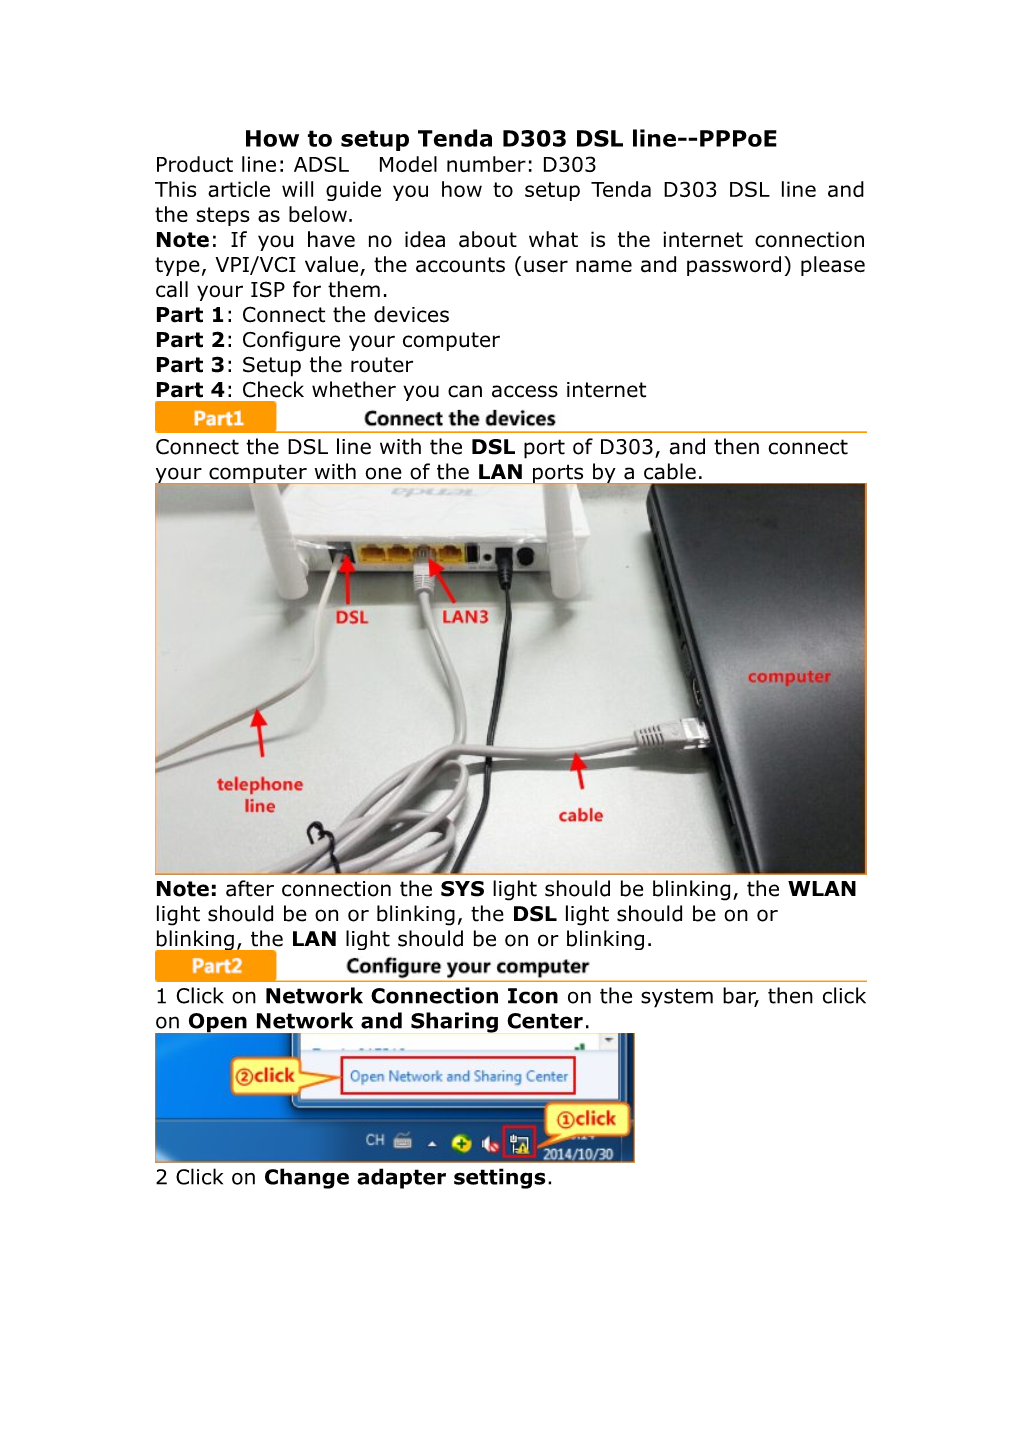 How to Setup Tenda D303 DSL Line Pppoe